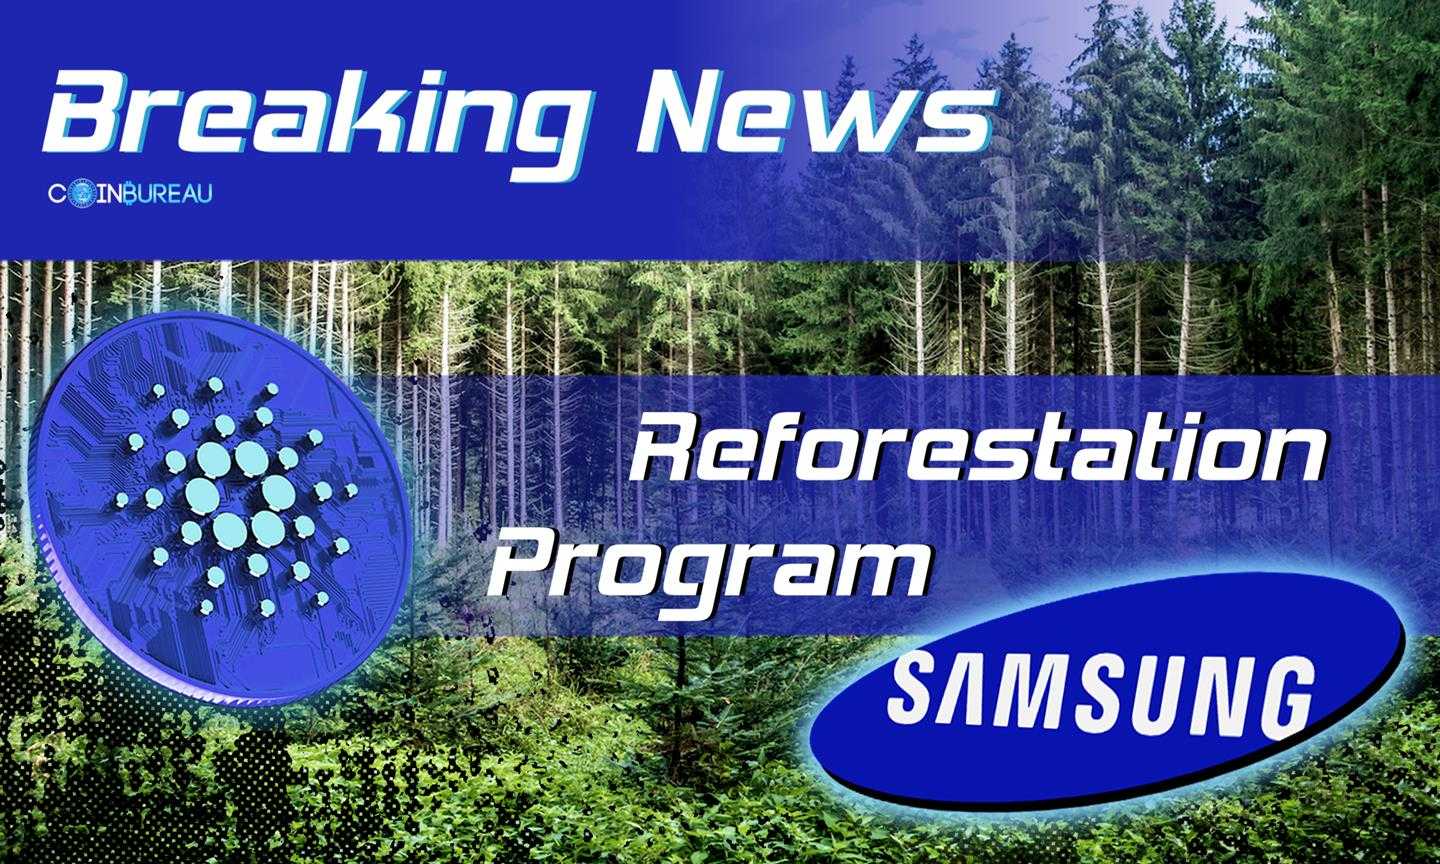 Tech Giant Samsung to Use Cardano Blockchain for Reforestation Program